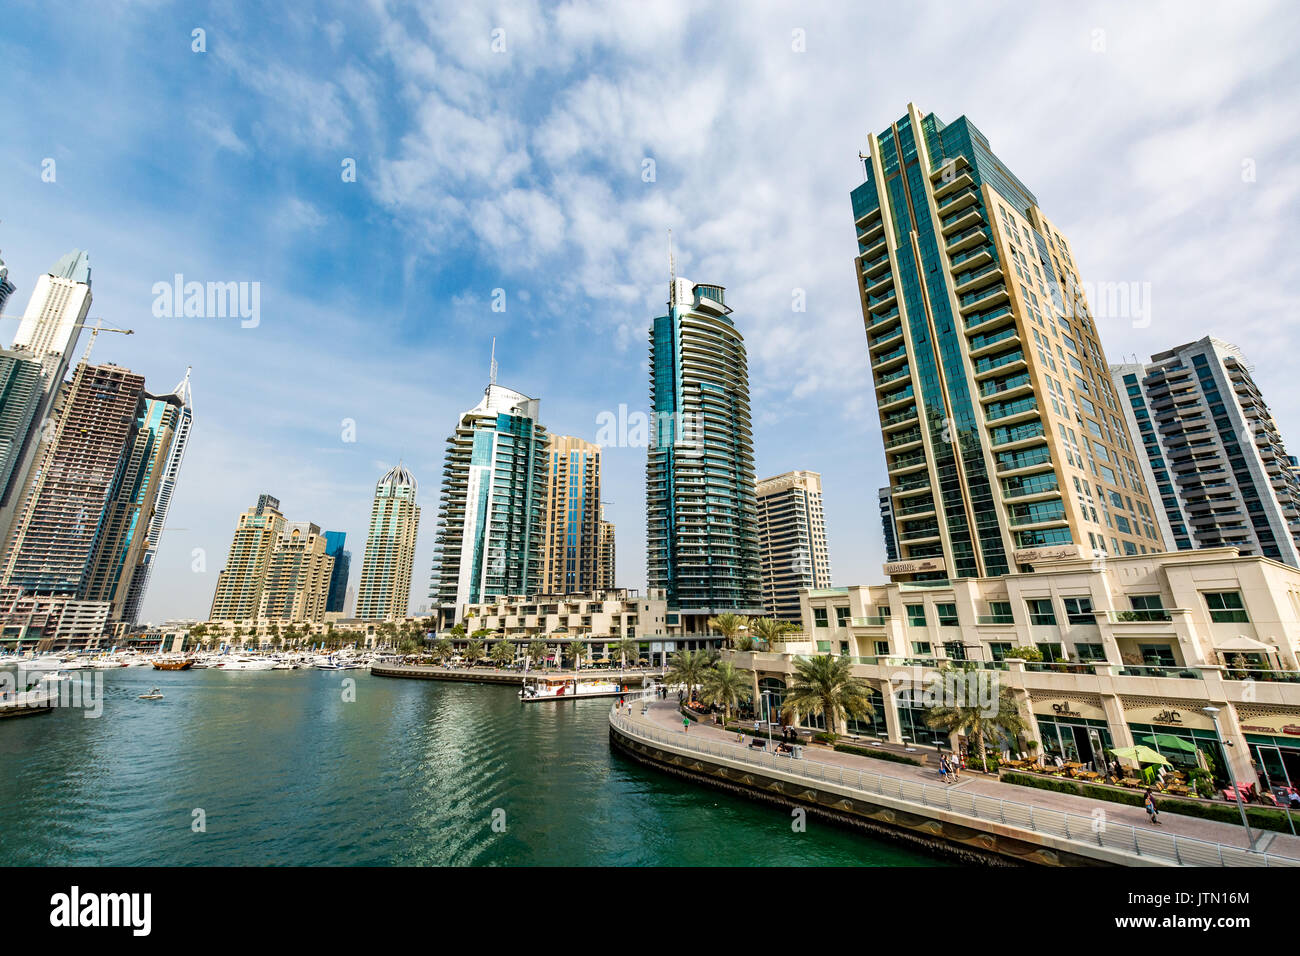 Vistas panorámicas del puerto deportivo de Dubai en un hermoso día, Dubai, Emiratos Árabes Unidos. Foto de stock